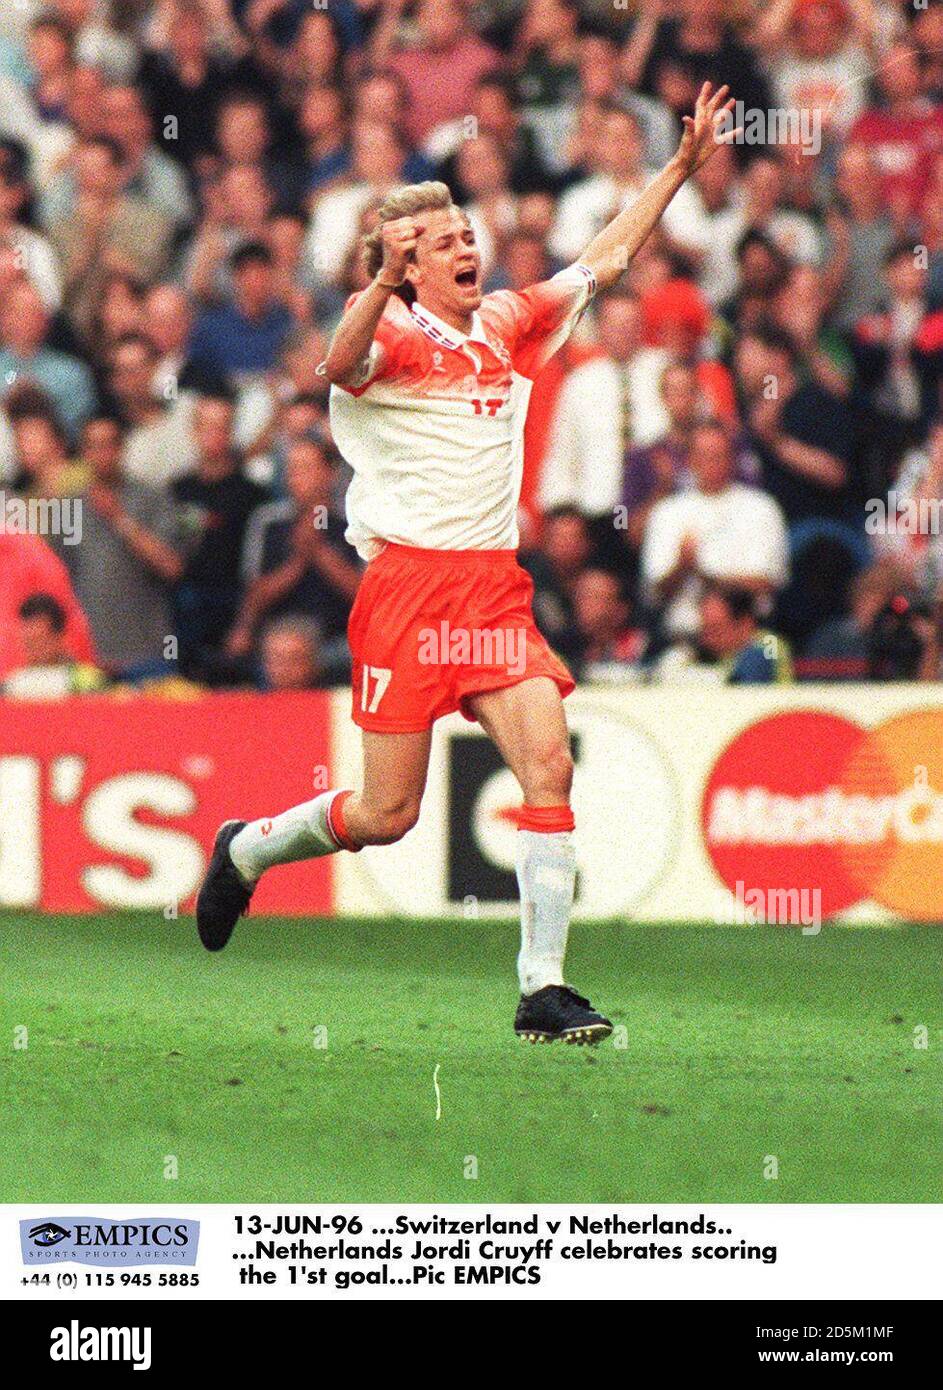 13-JUN-96 ...Switzerland v Netherlands. Netherlands Jordi Cruyff celebrates scoring the 1'st goal Stock Photo